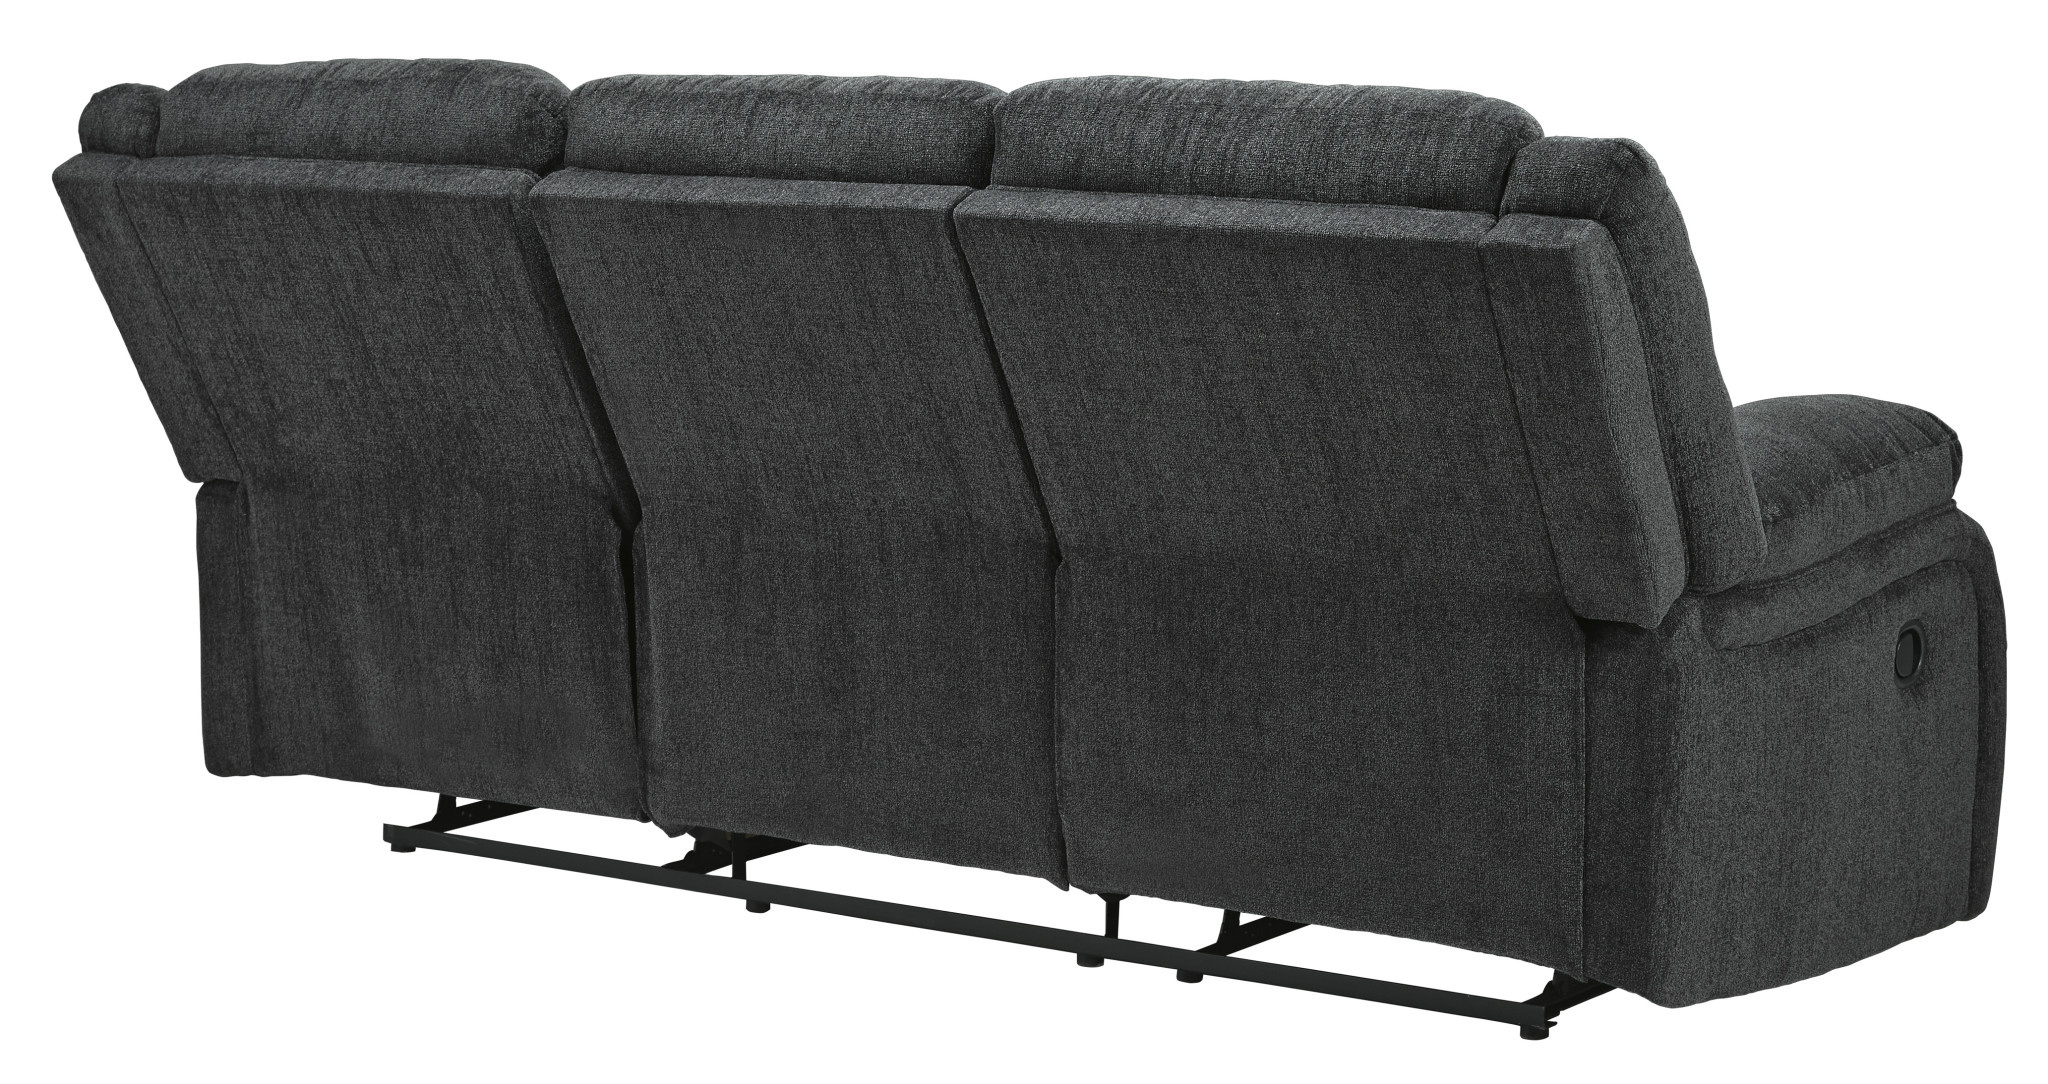 Signature Design "Draycoll"- Reclining Sofa- Slate Color- 7650488